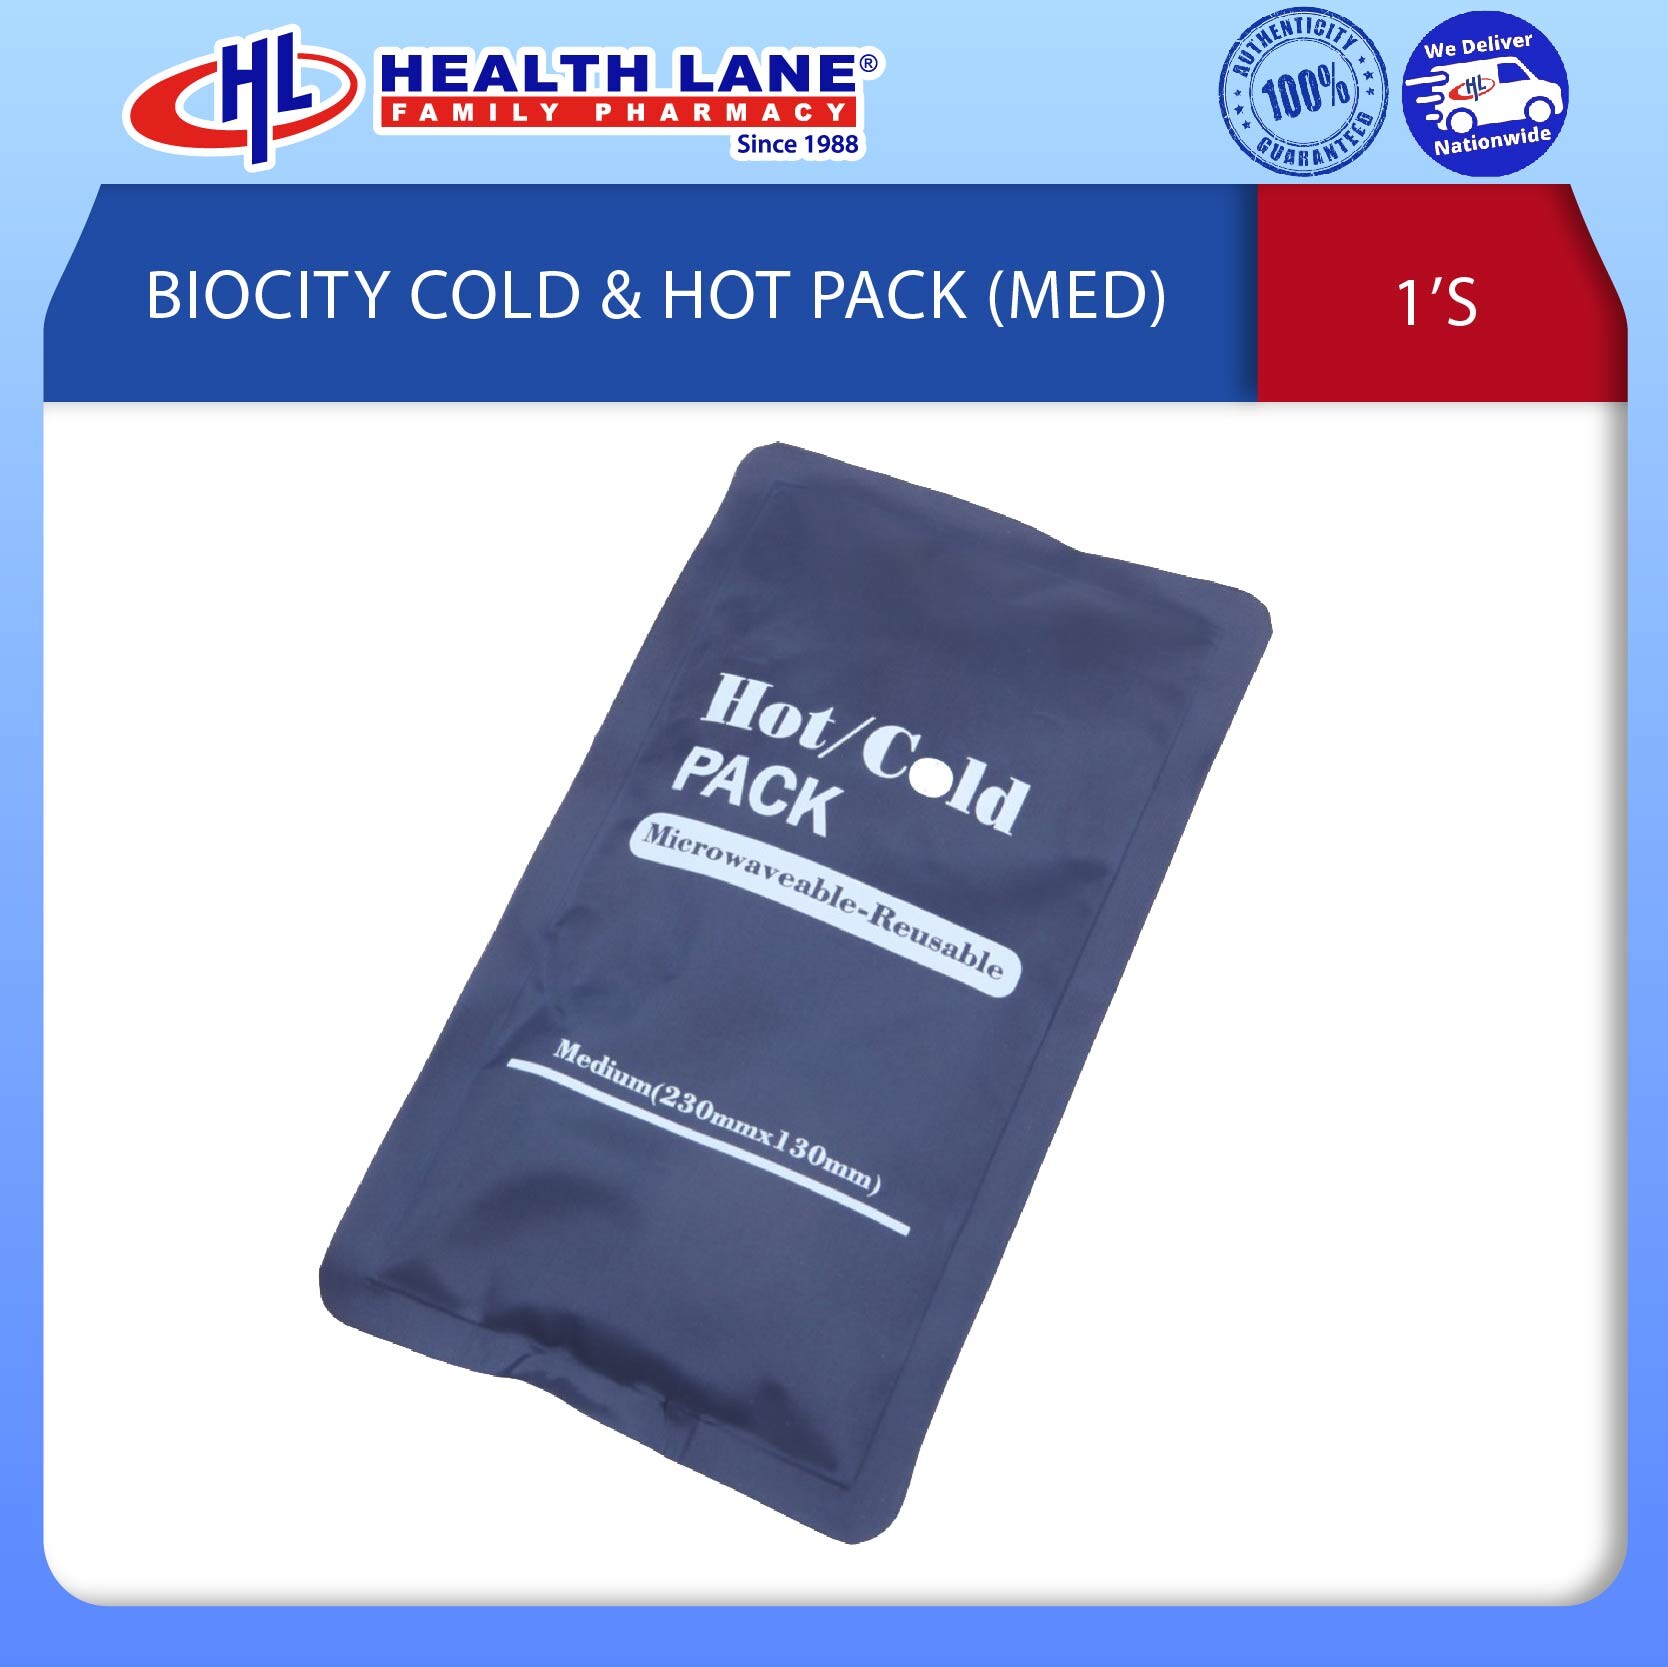 BIOCITY COLD & HOT PACK (MED)